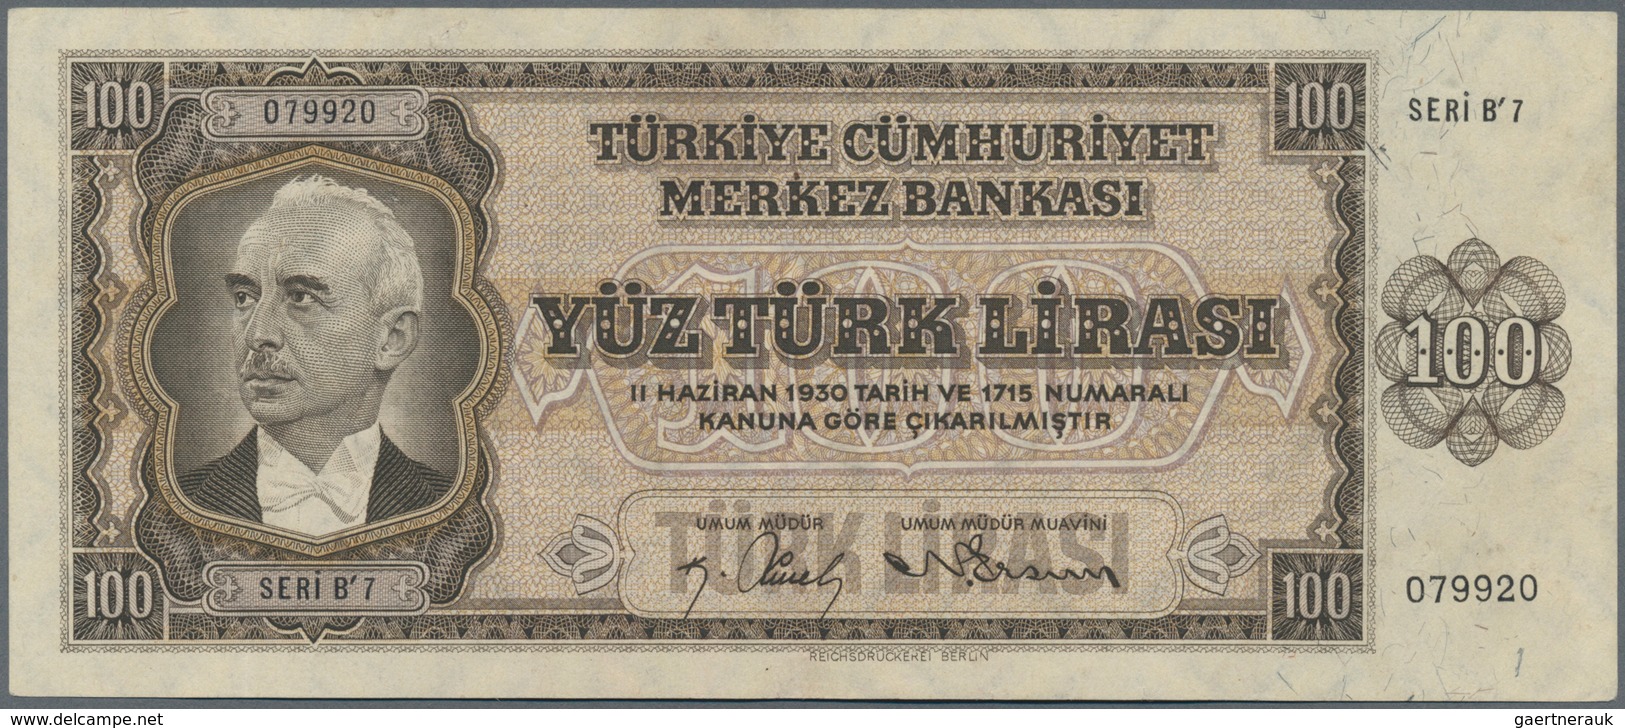 Turkey / Türkei: Türkiye Cümhuriyet Merkez Bankasi 100 Lira L.1930 ND(1942-47), Reichsdruckerei Berl - Turchia